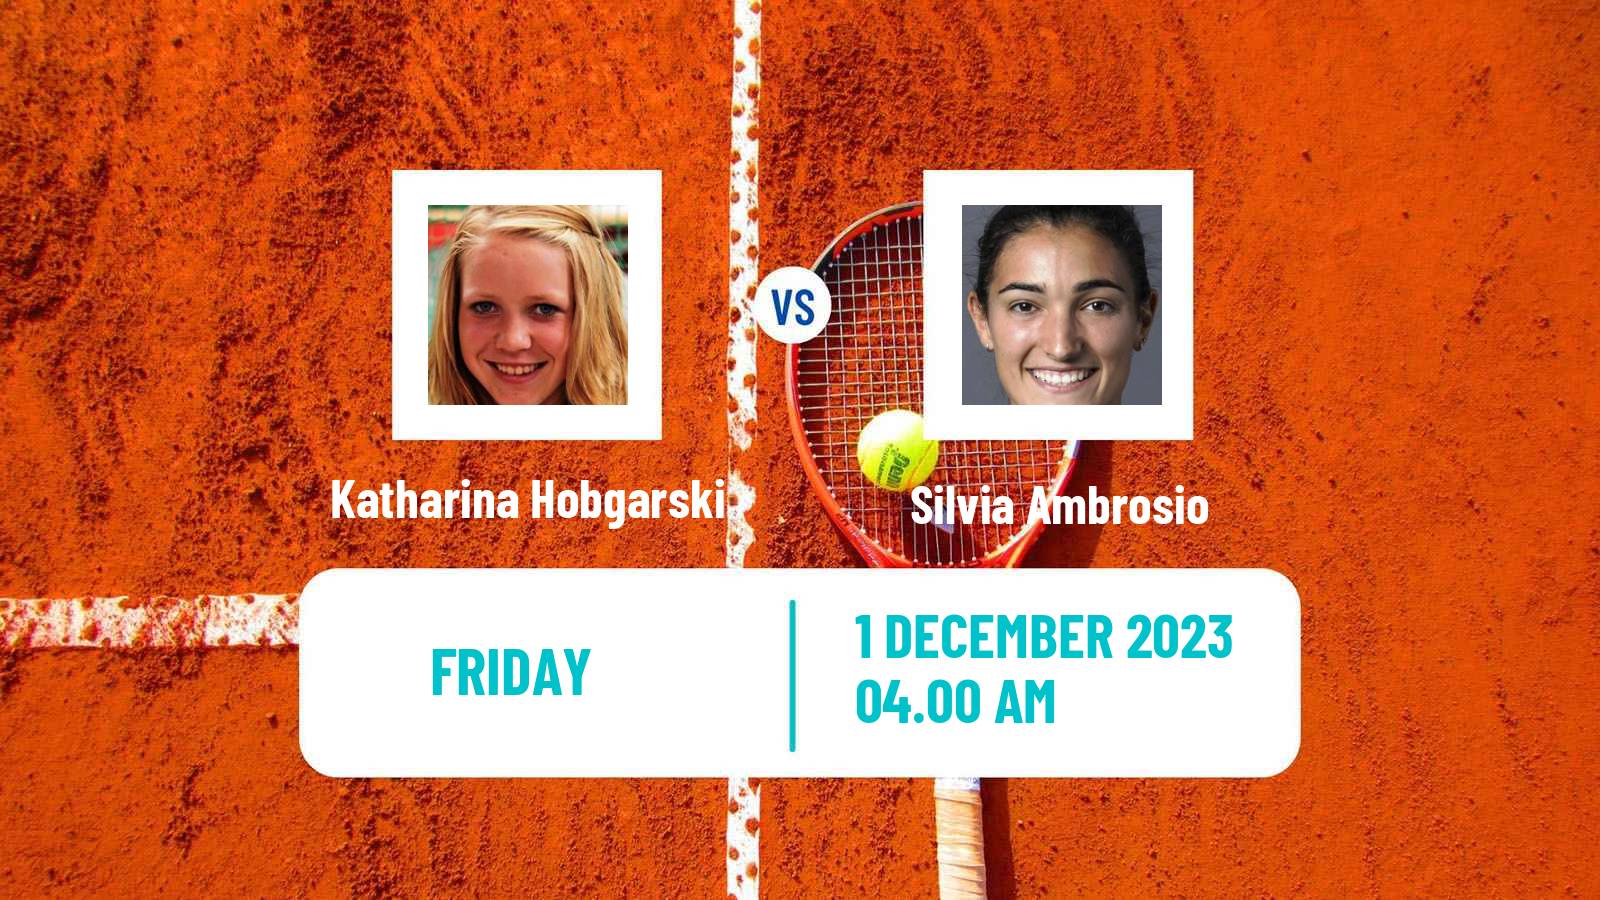 Tennis ITF W25 Limassol 2 Women Katharina Hobgarski - Silvia Ambrosio